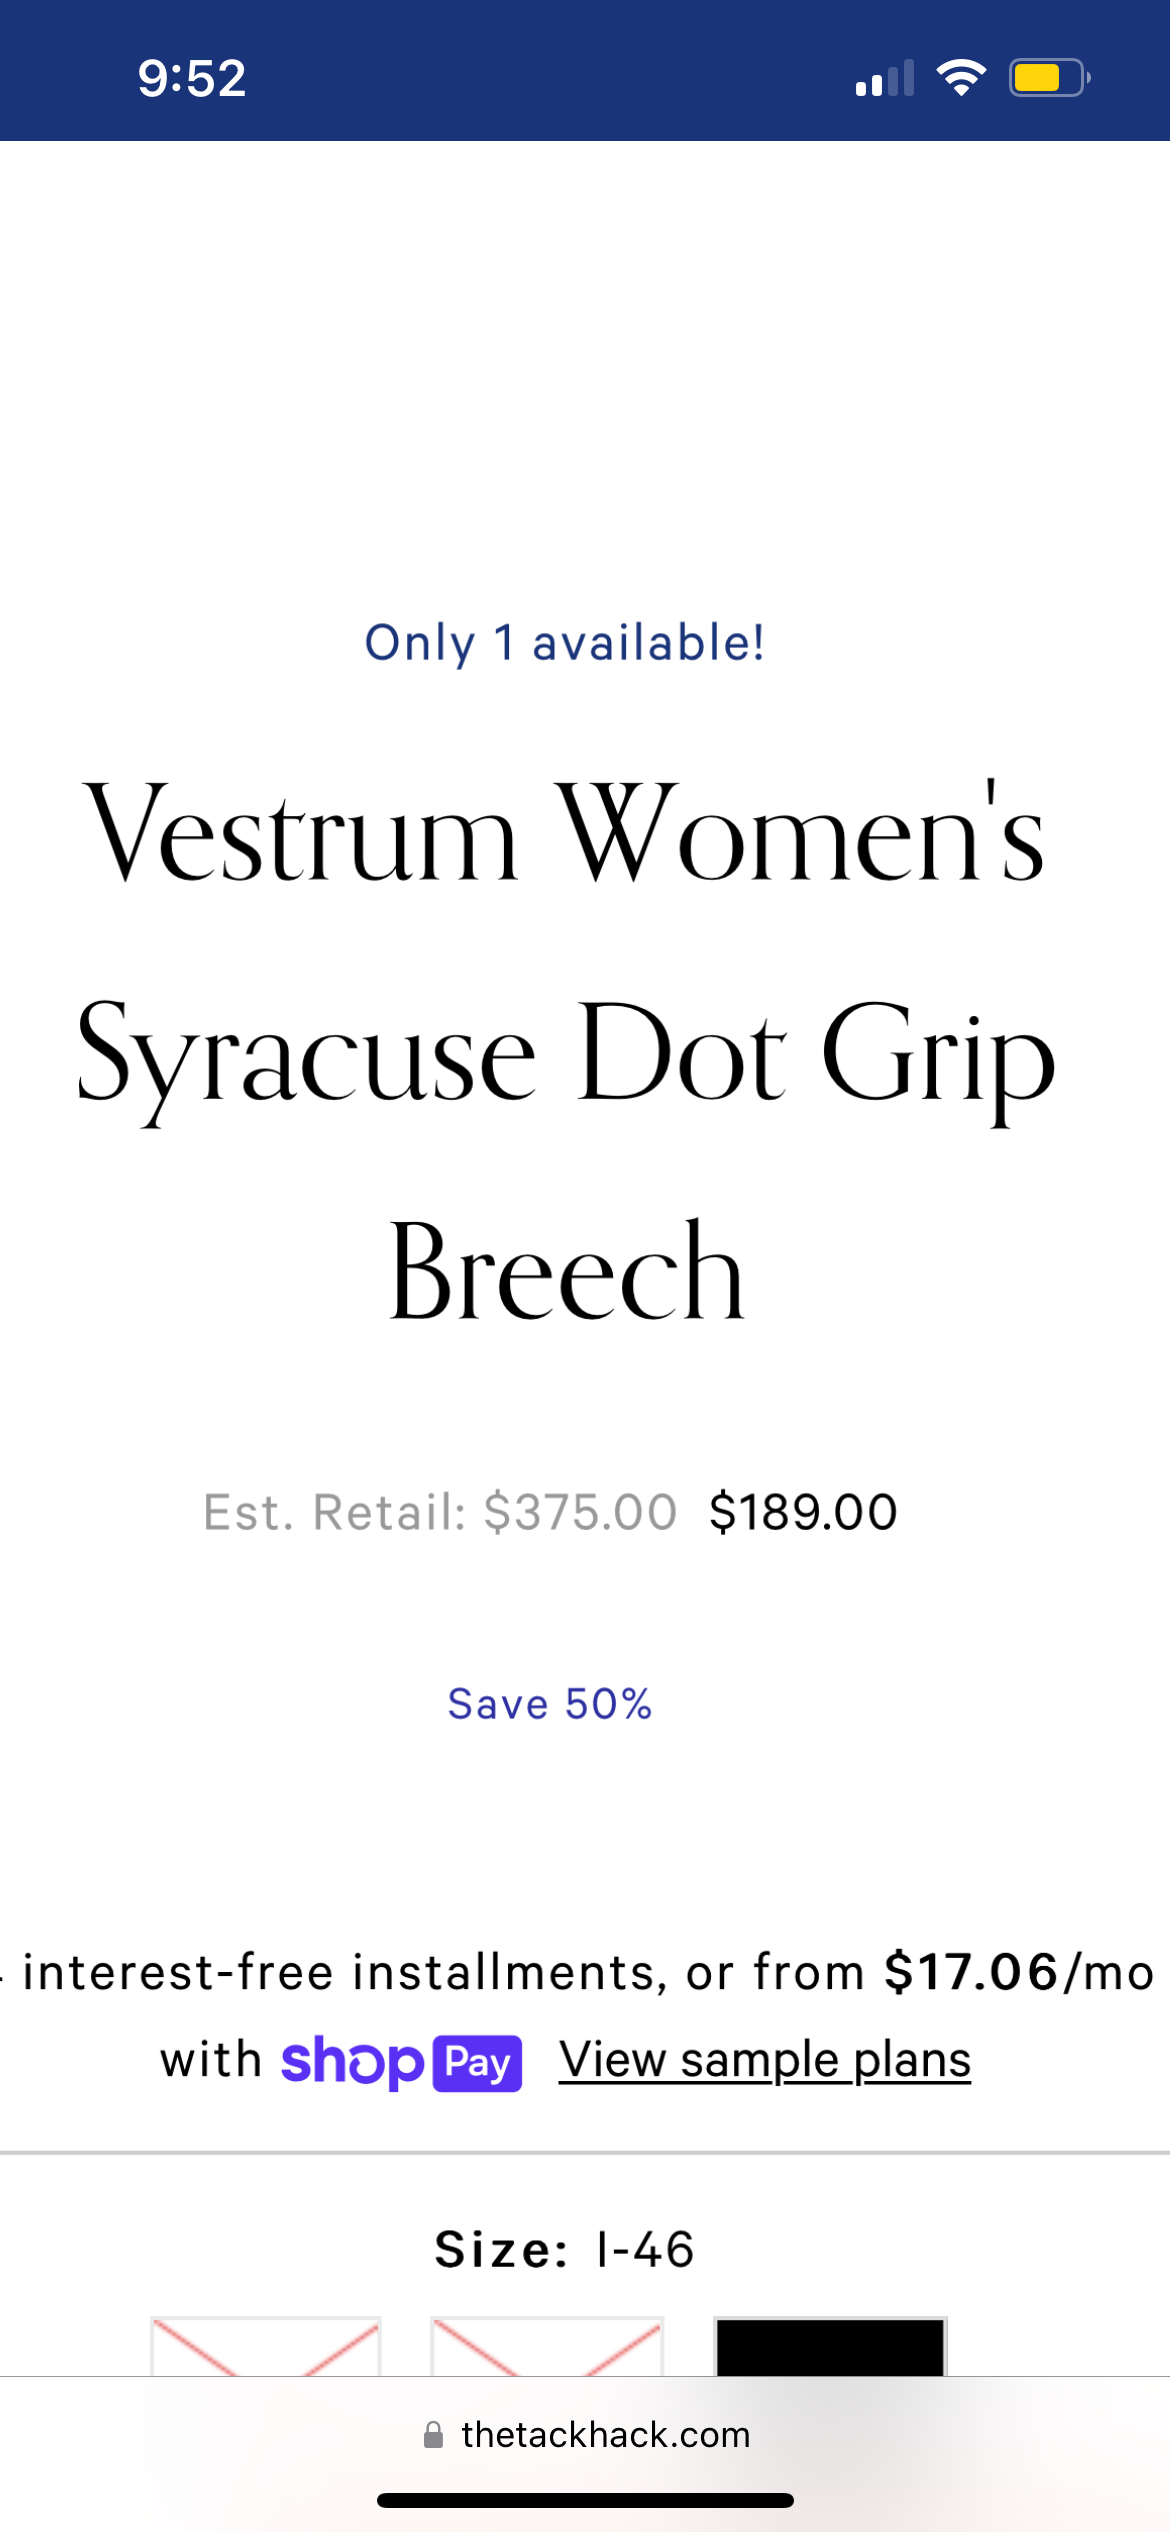 Vestrum Ladies Syracuse Tan Dot Grip Breeches